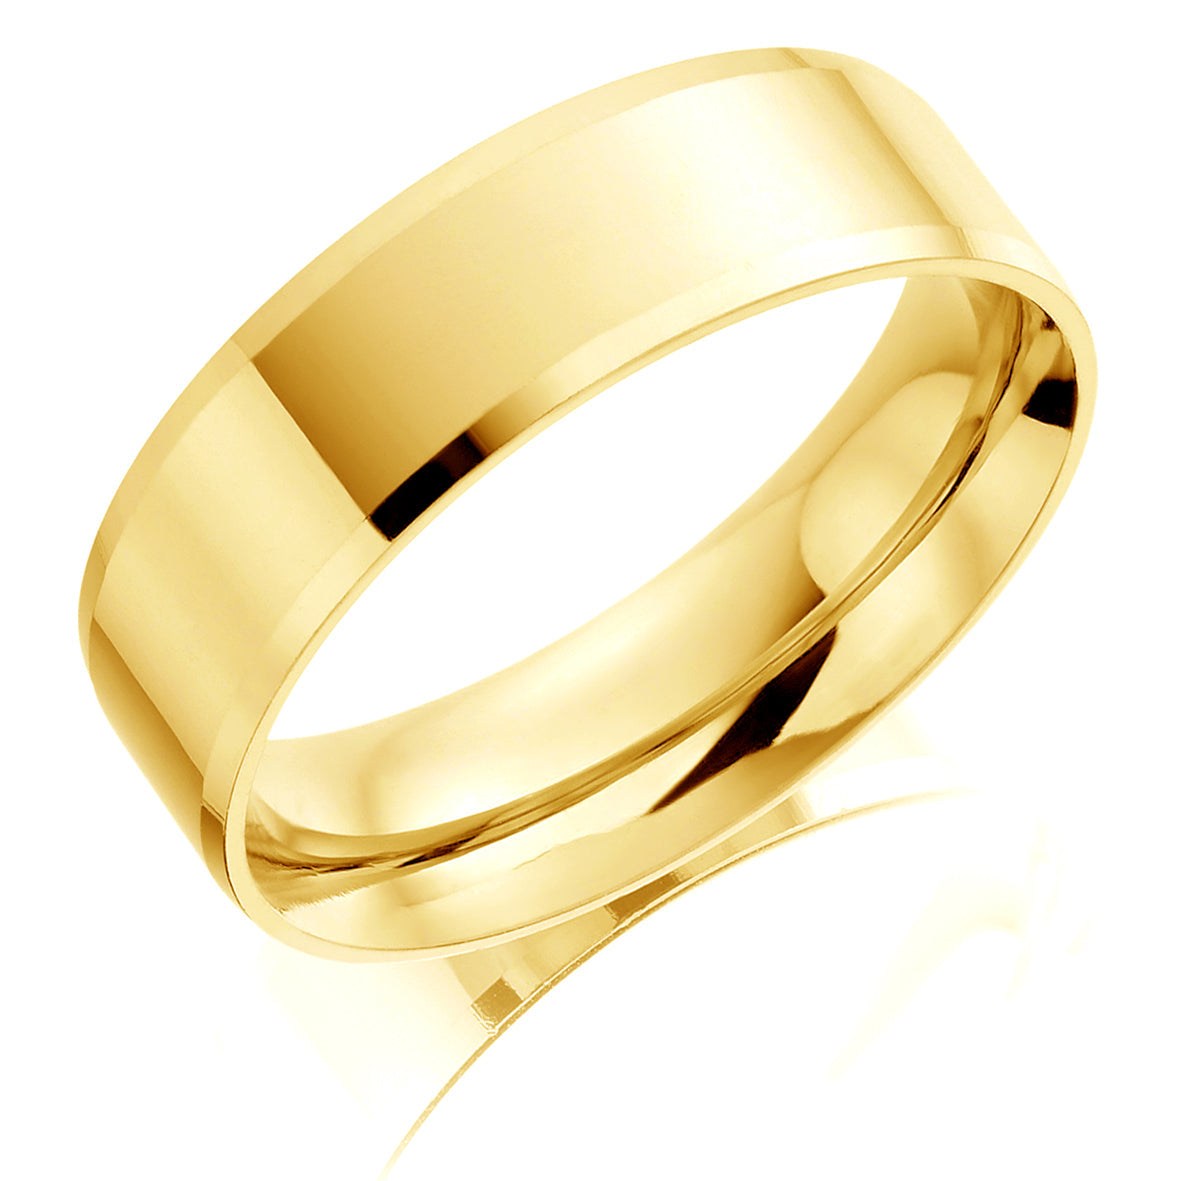 Men's 9ct Yellow Gold 6mm Classic Flat Court Wedding Ring